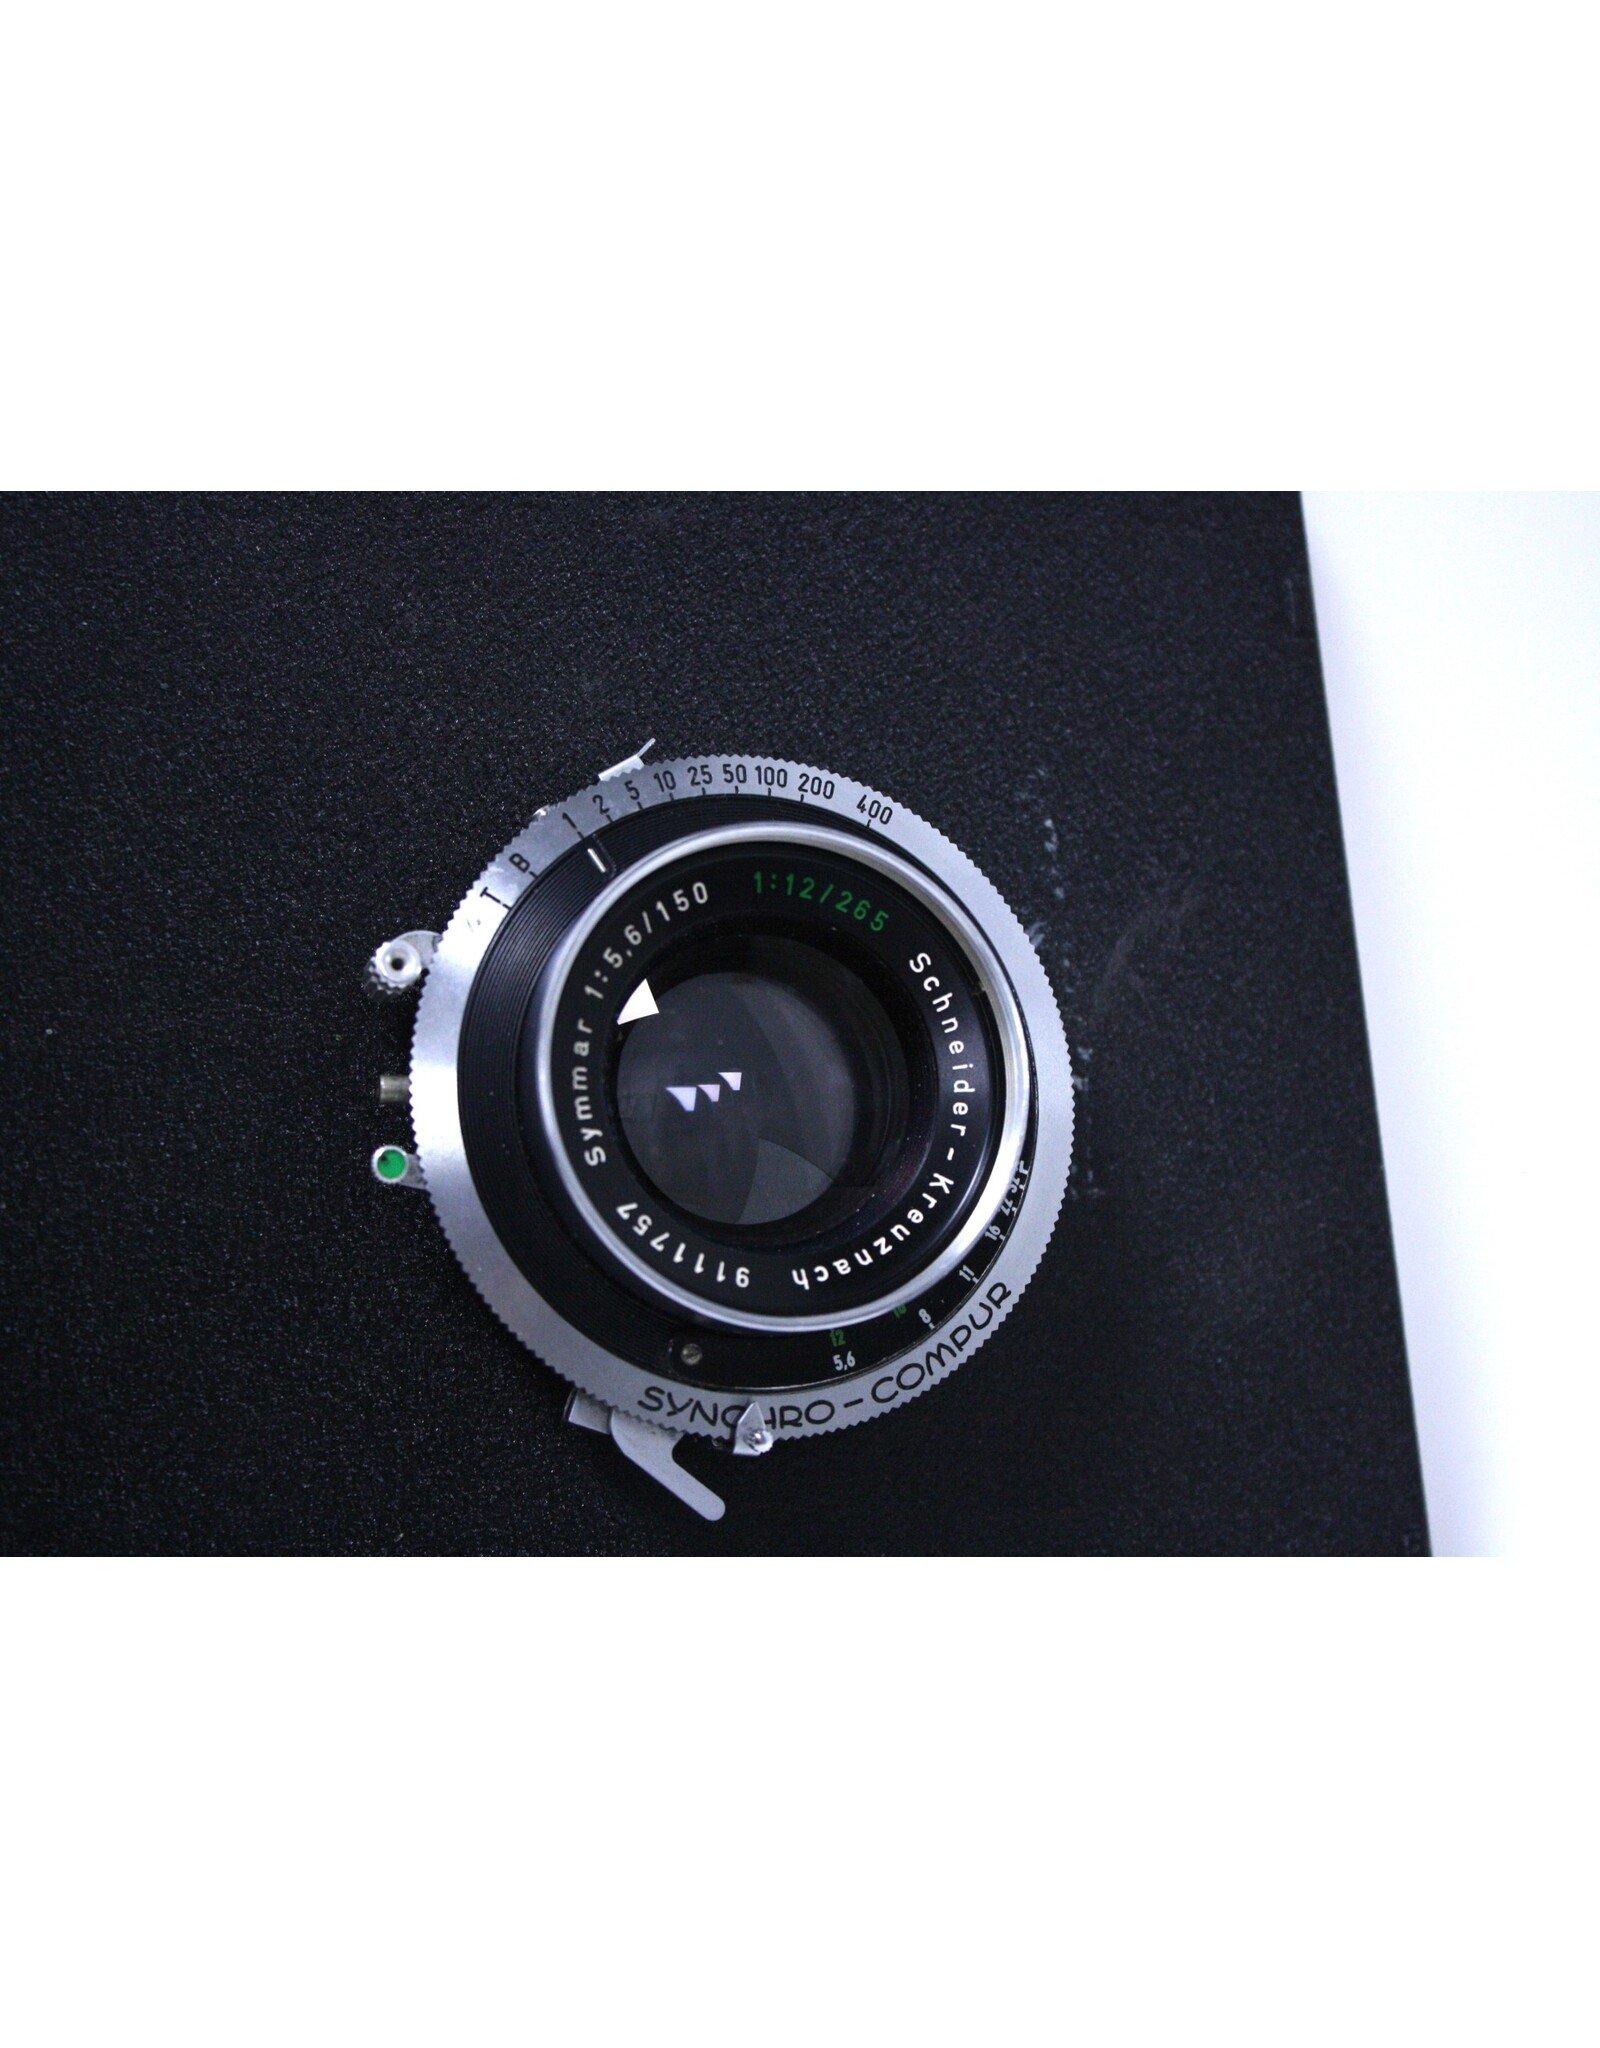 Schneider Kreuznach APO Symmar 150mm f5.6 MC Multicoated Lens